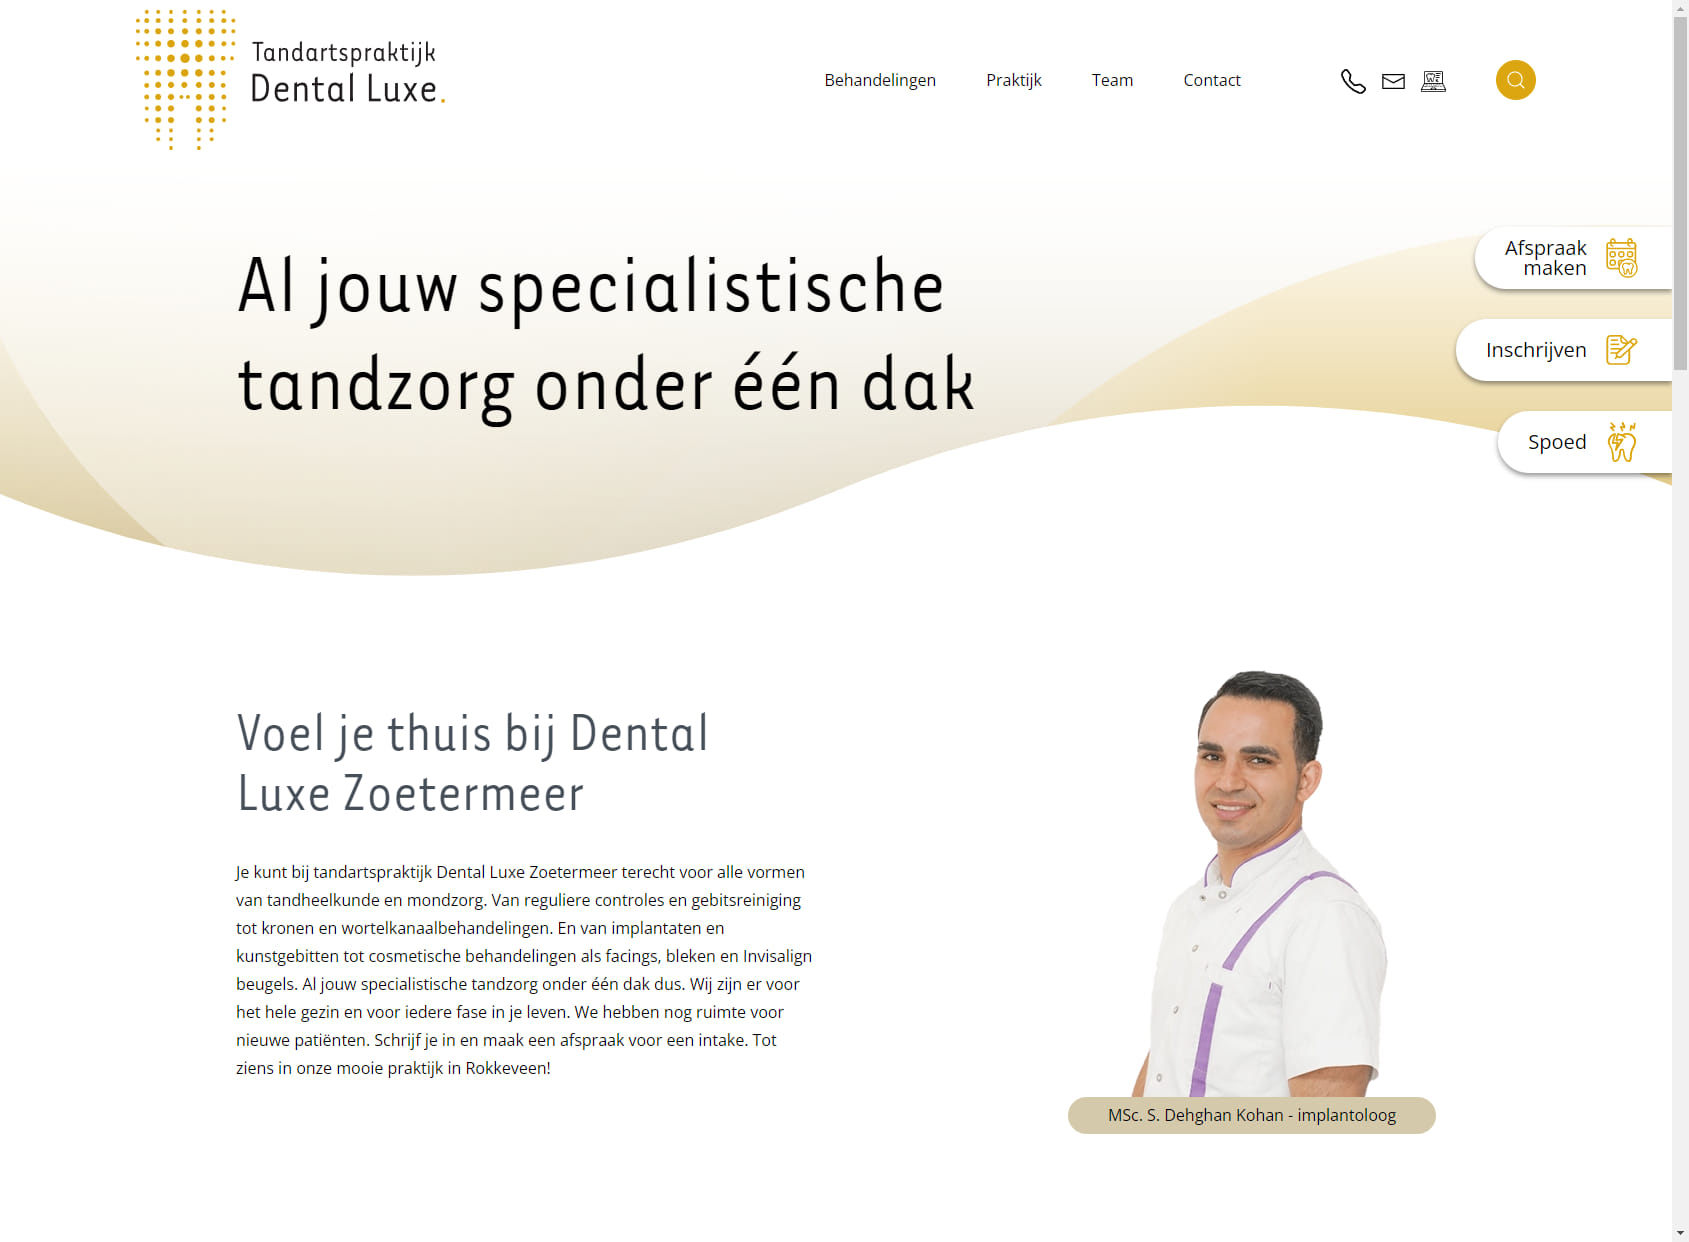 Dental Luxe